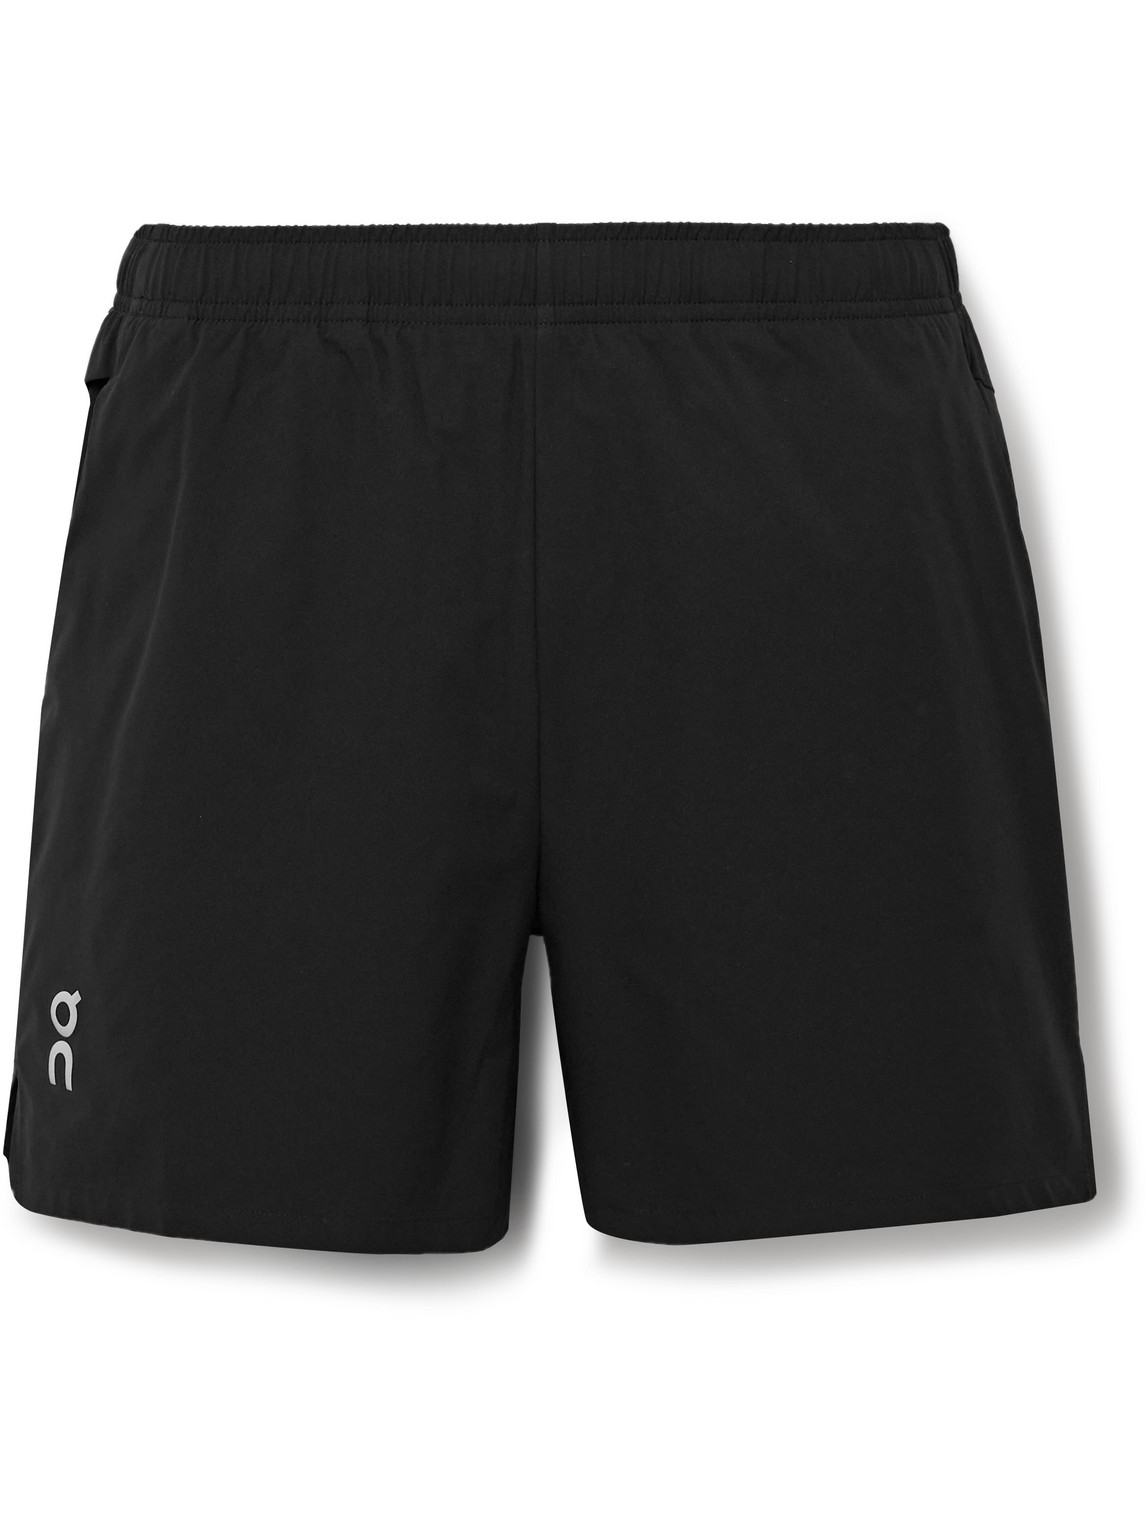 ON - Essential Straight-Leg Recycled-Shell Running Shorts - Men - Black - S von ON